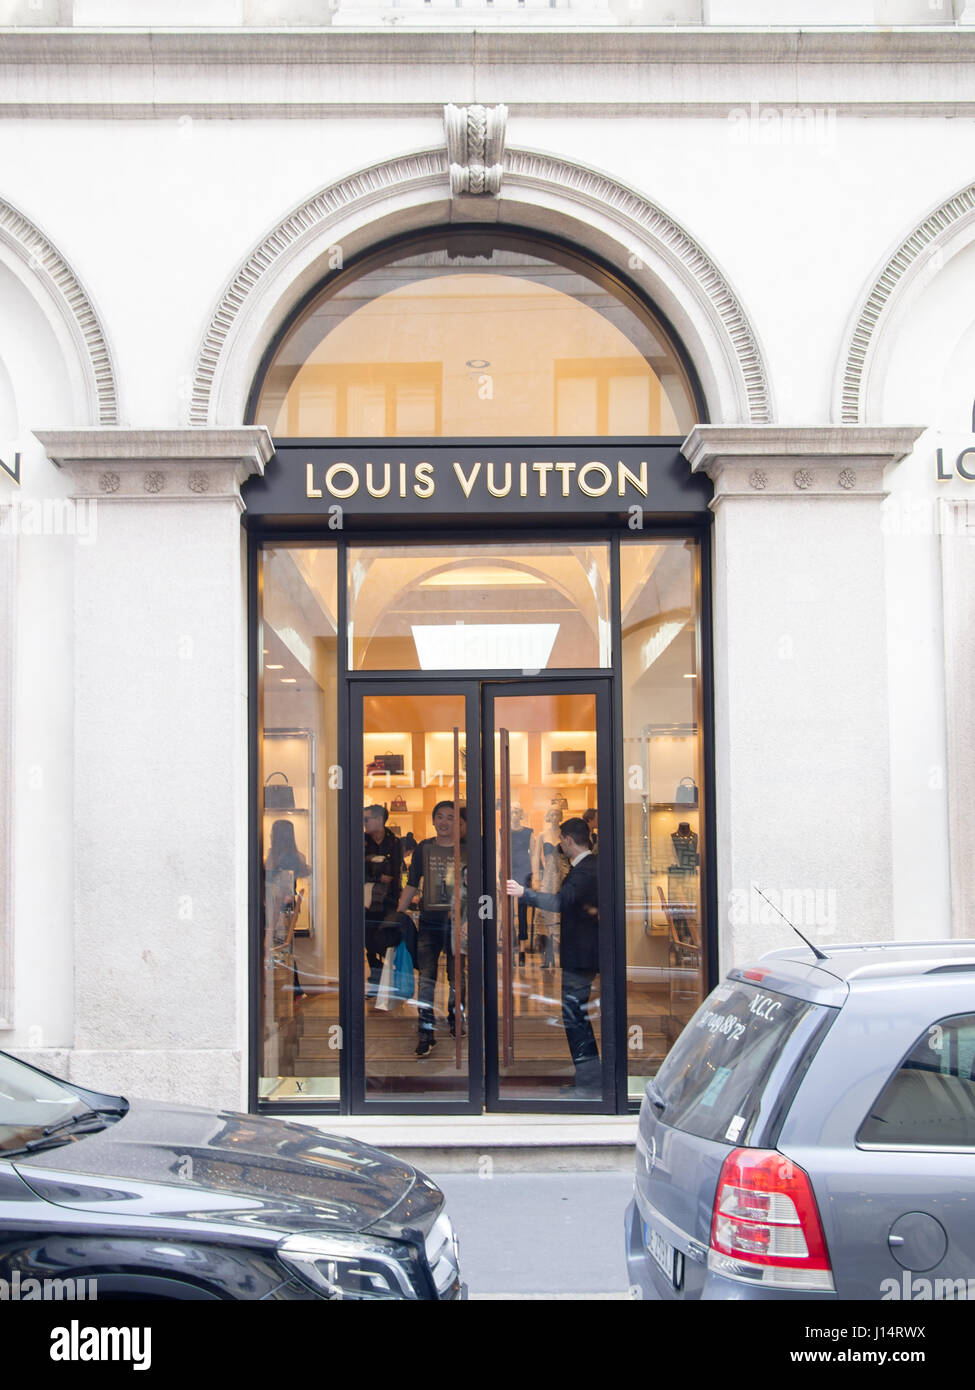 Louis Vuitton Storefront Stock Photos & Louis Vuitton Storefront Stock Images - Alamy